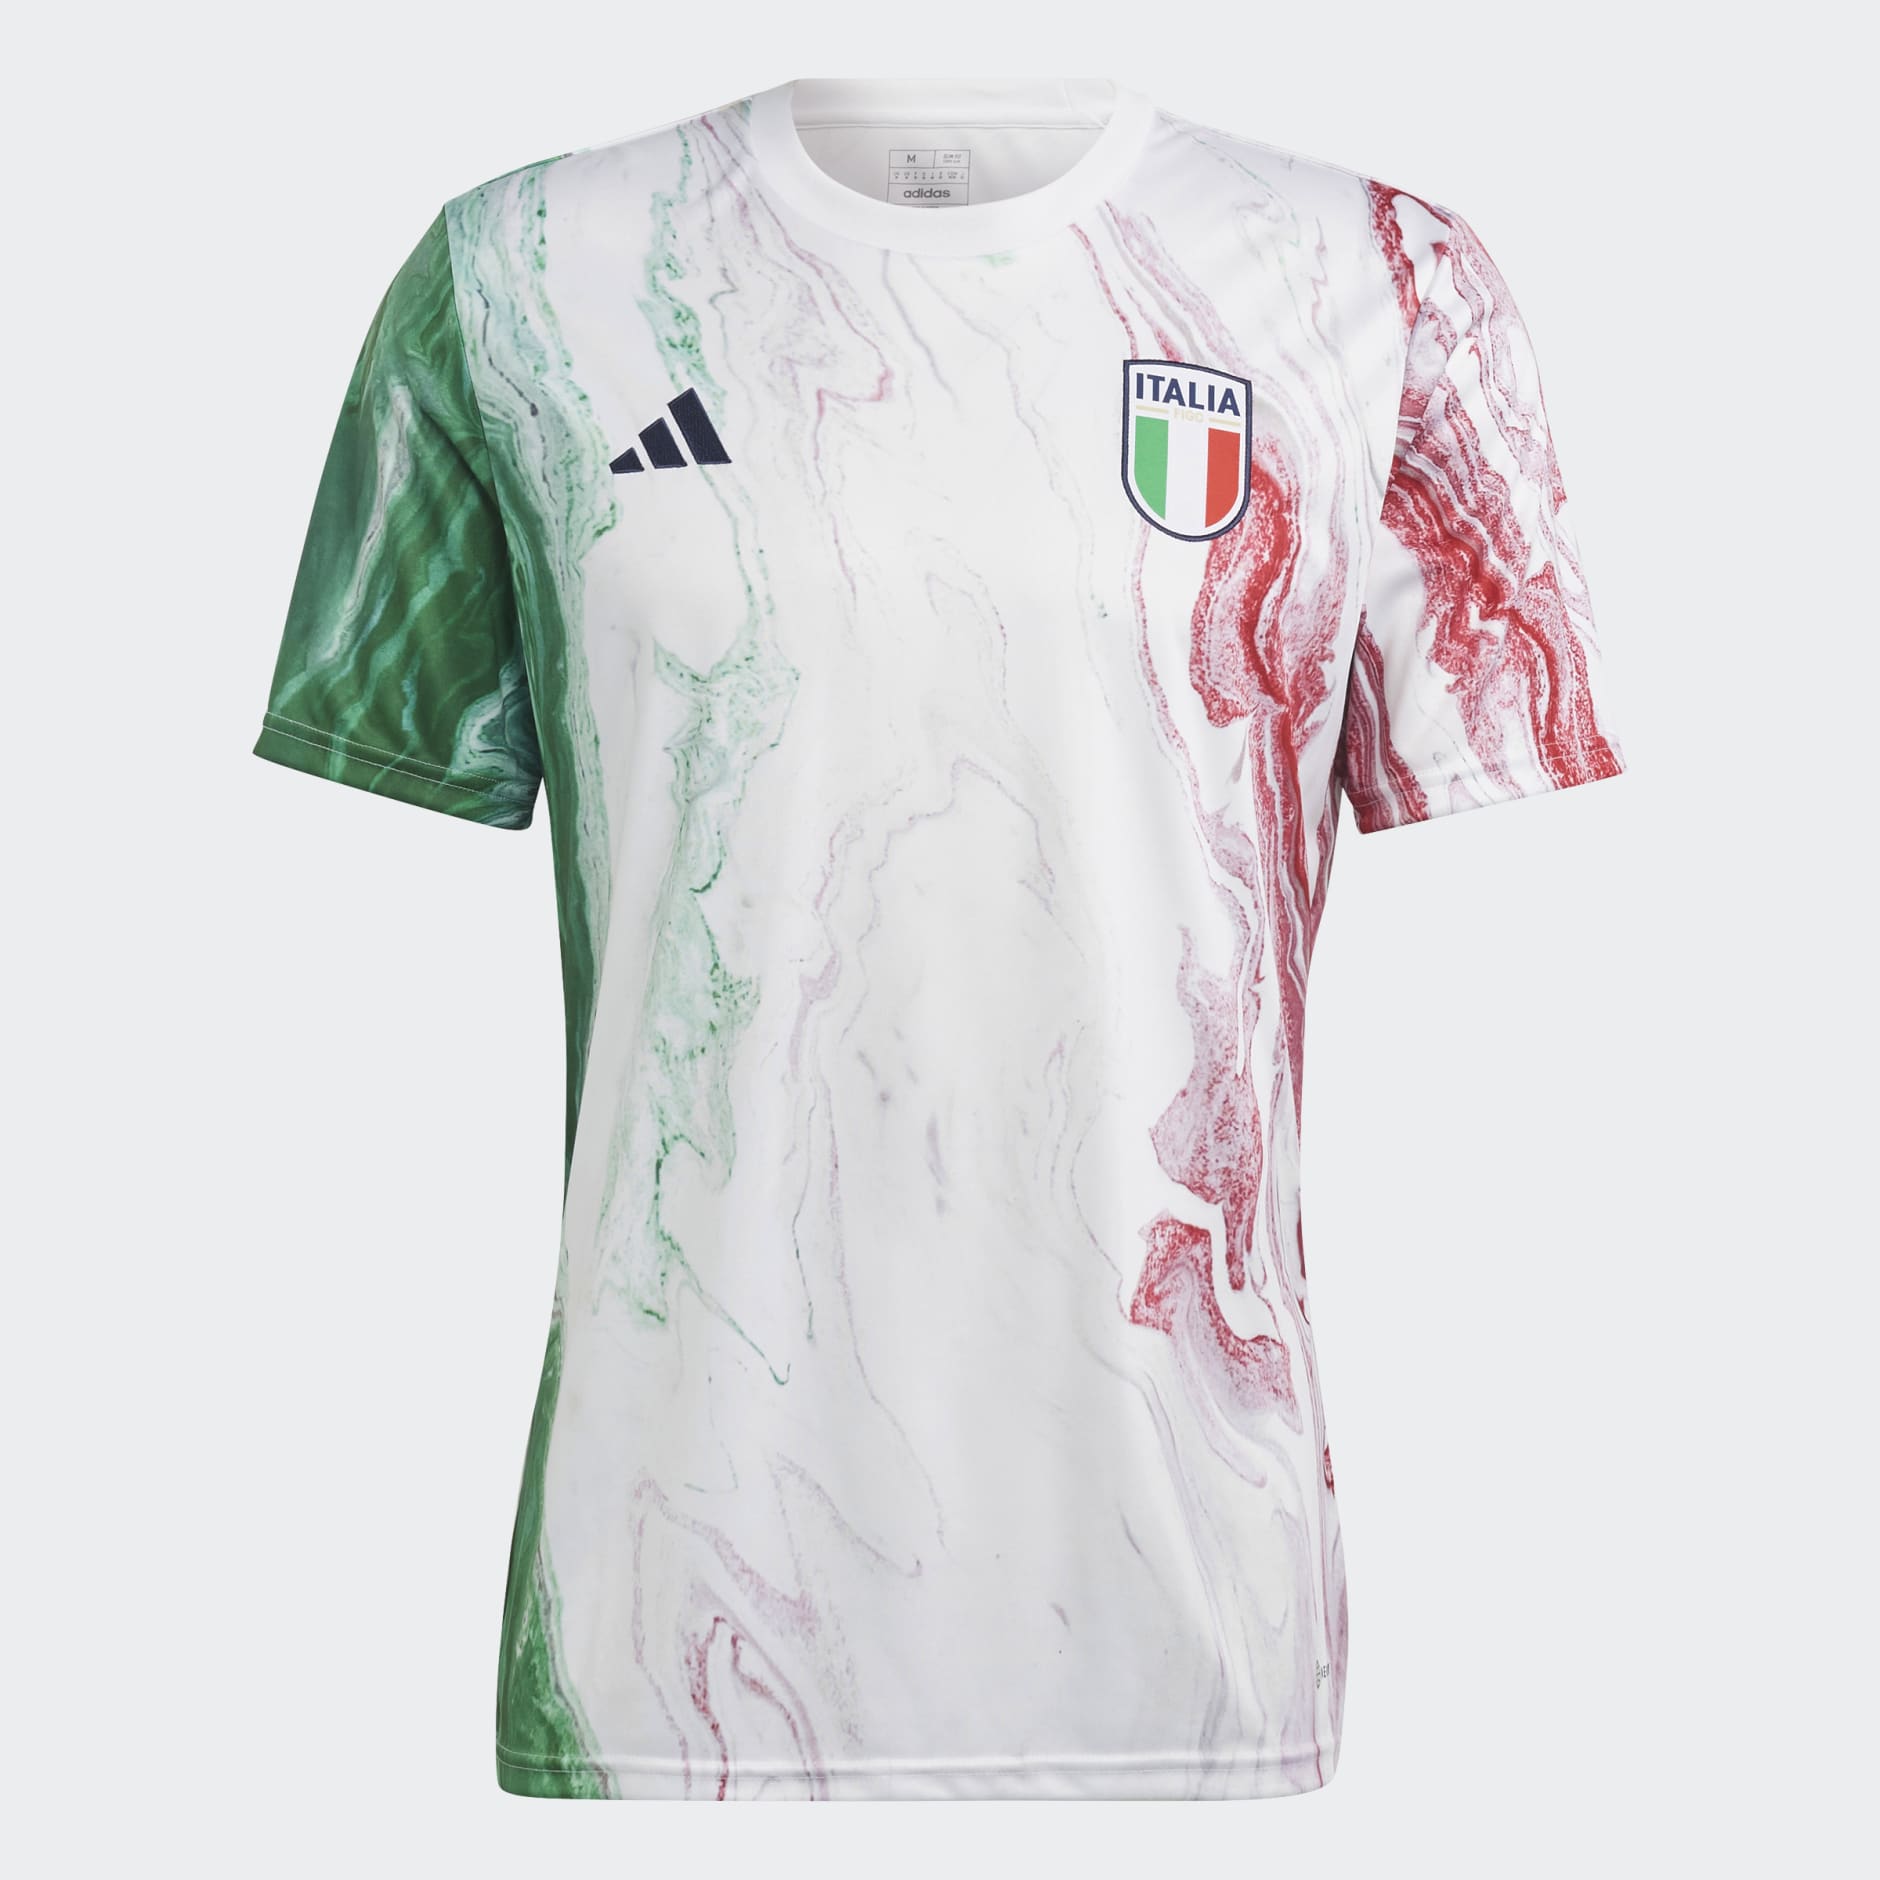 Gang patrouille kas Men's Clothing - Italy Pre-Match Jersey - Green | adidas Kuwait